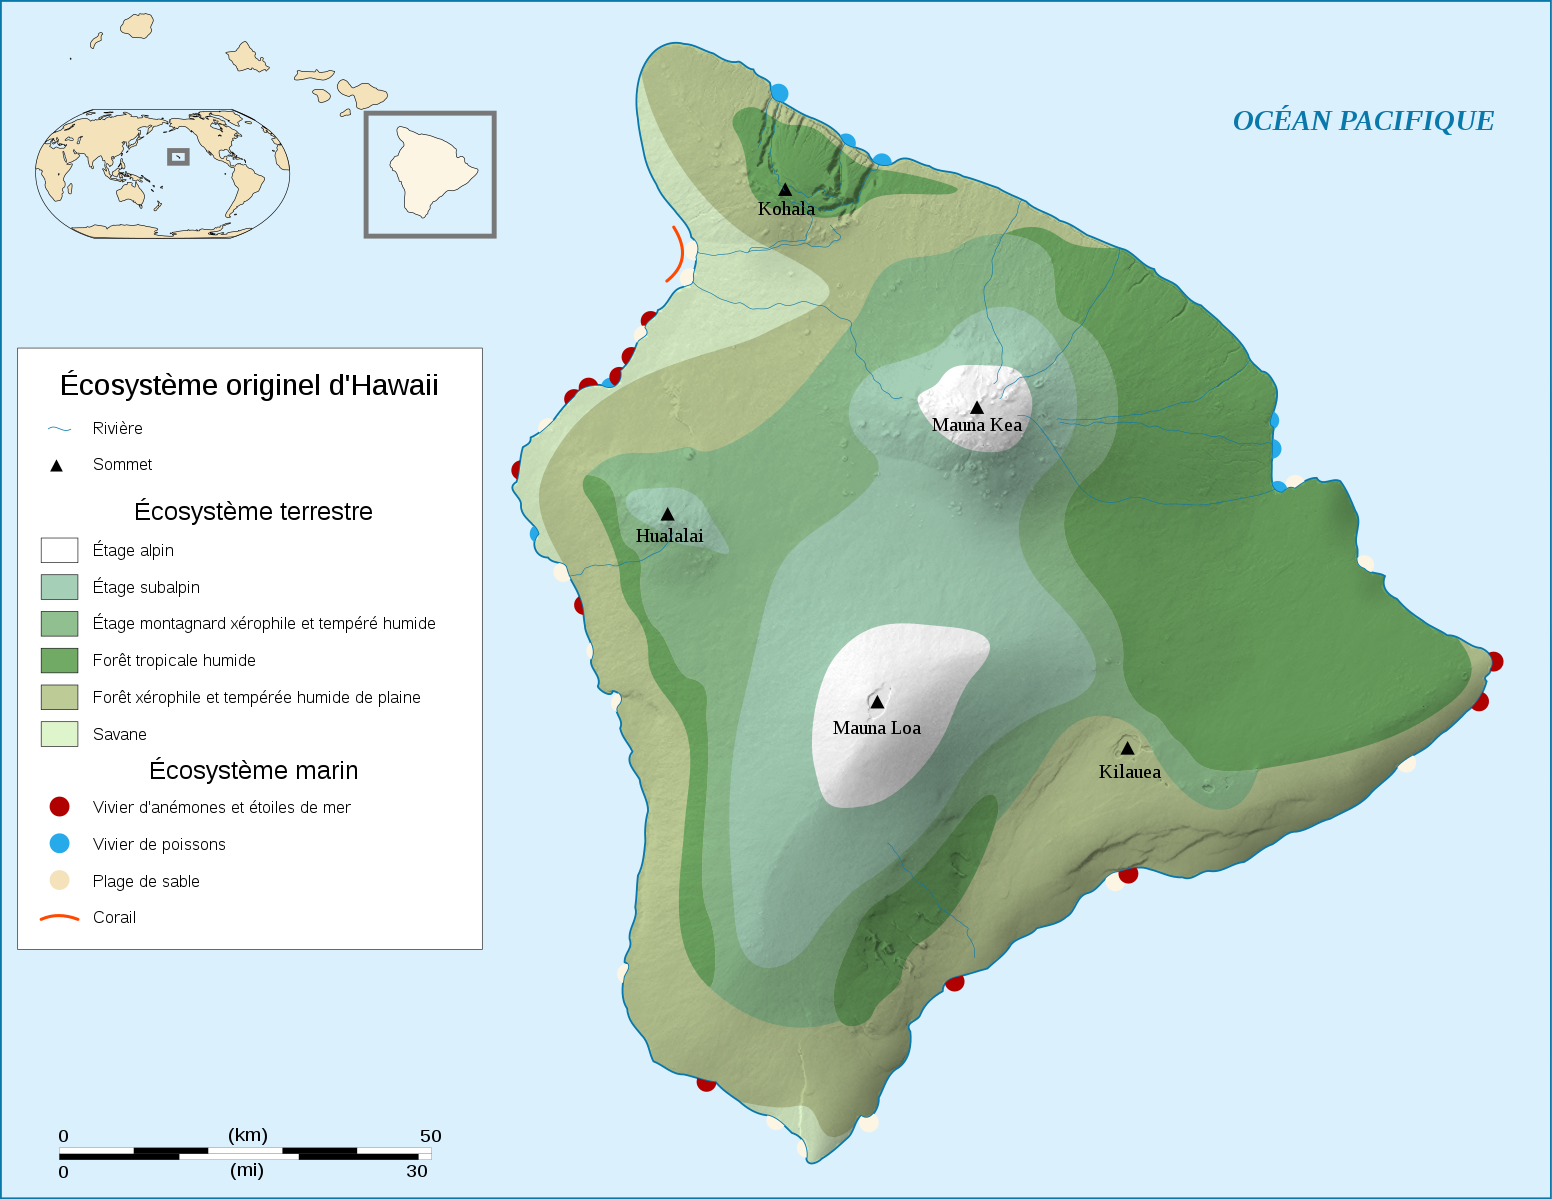 Мауна лоа на карте. Климатическая карта Гавайских островов. Мауна Кеа на карте. Природные зоны Гавайских островов.